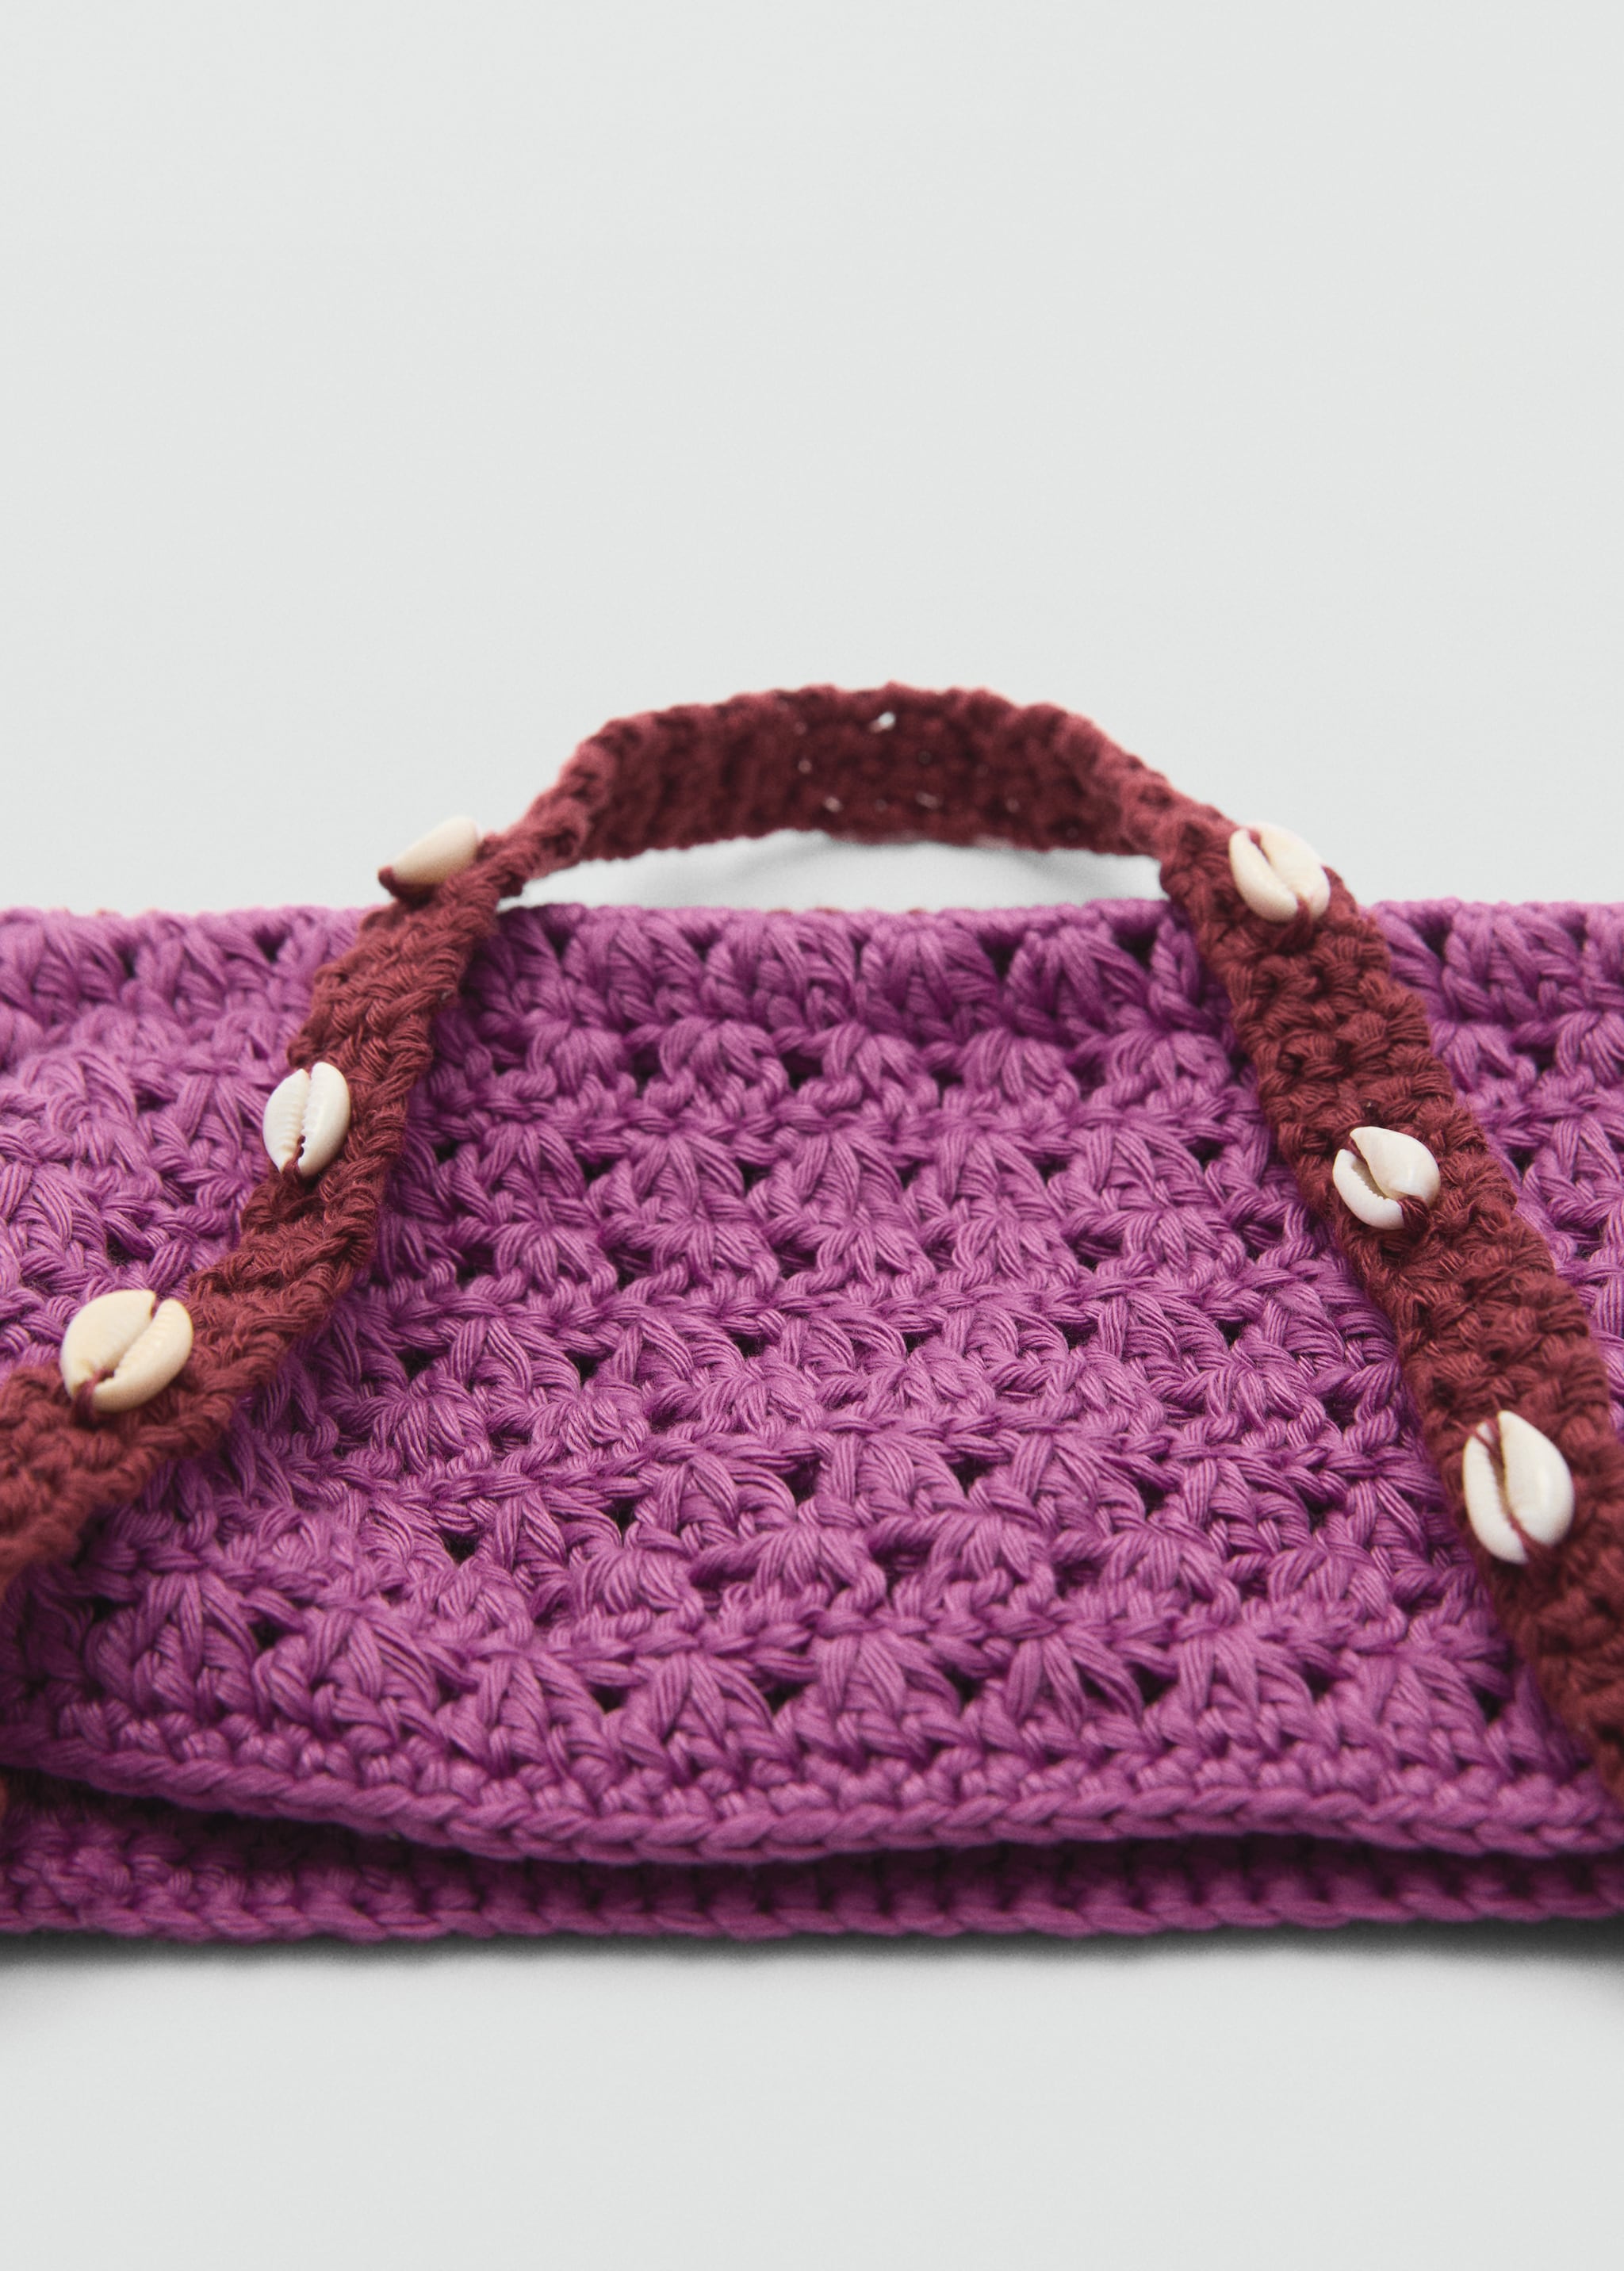 Crochet handbag - Details of the article 1